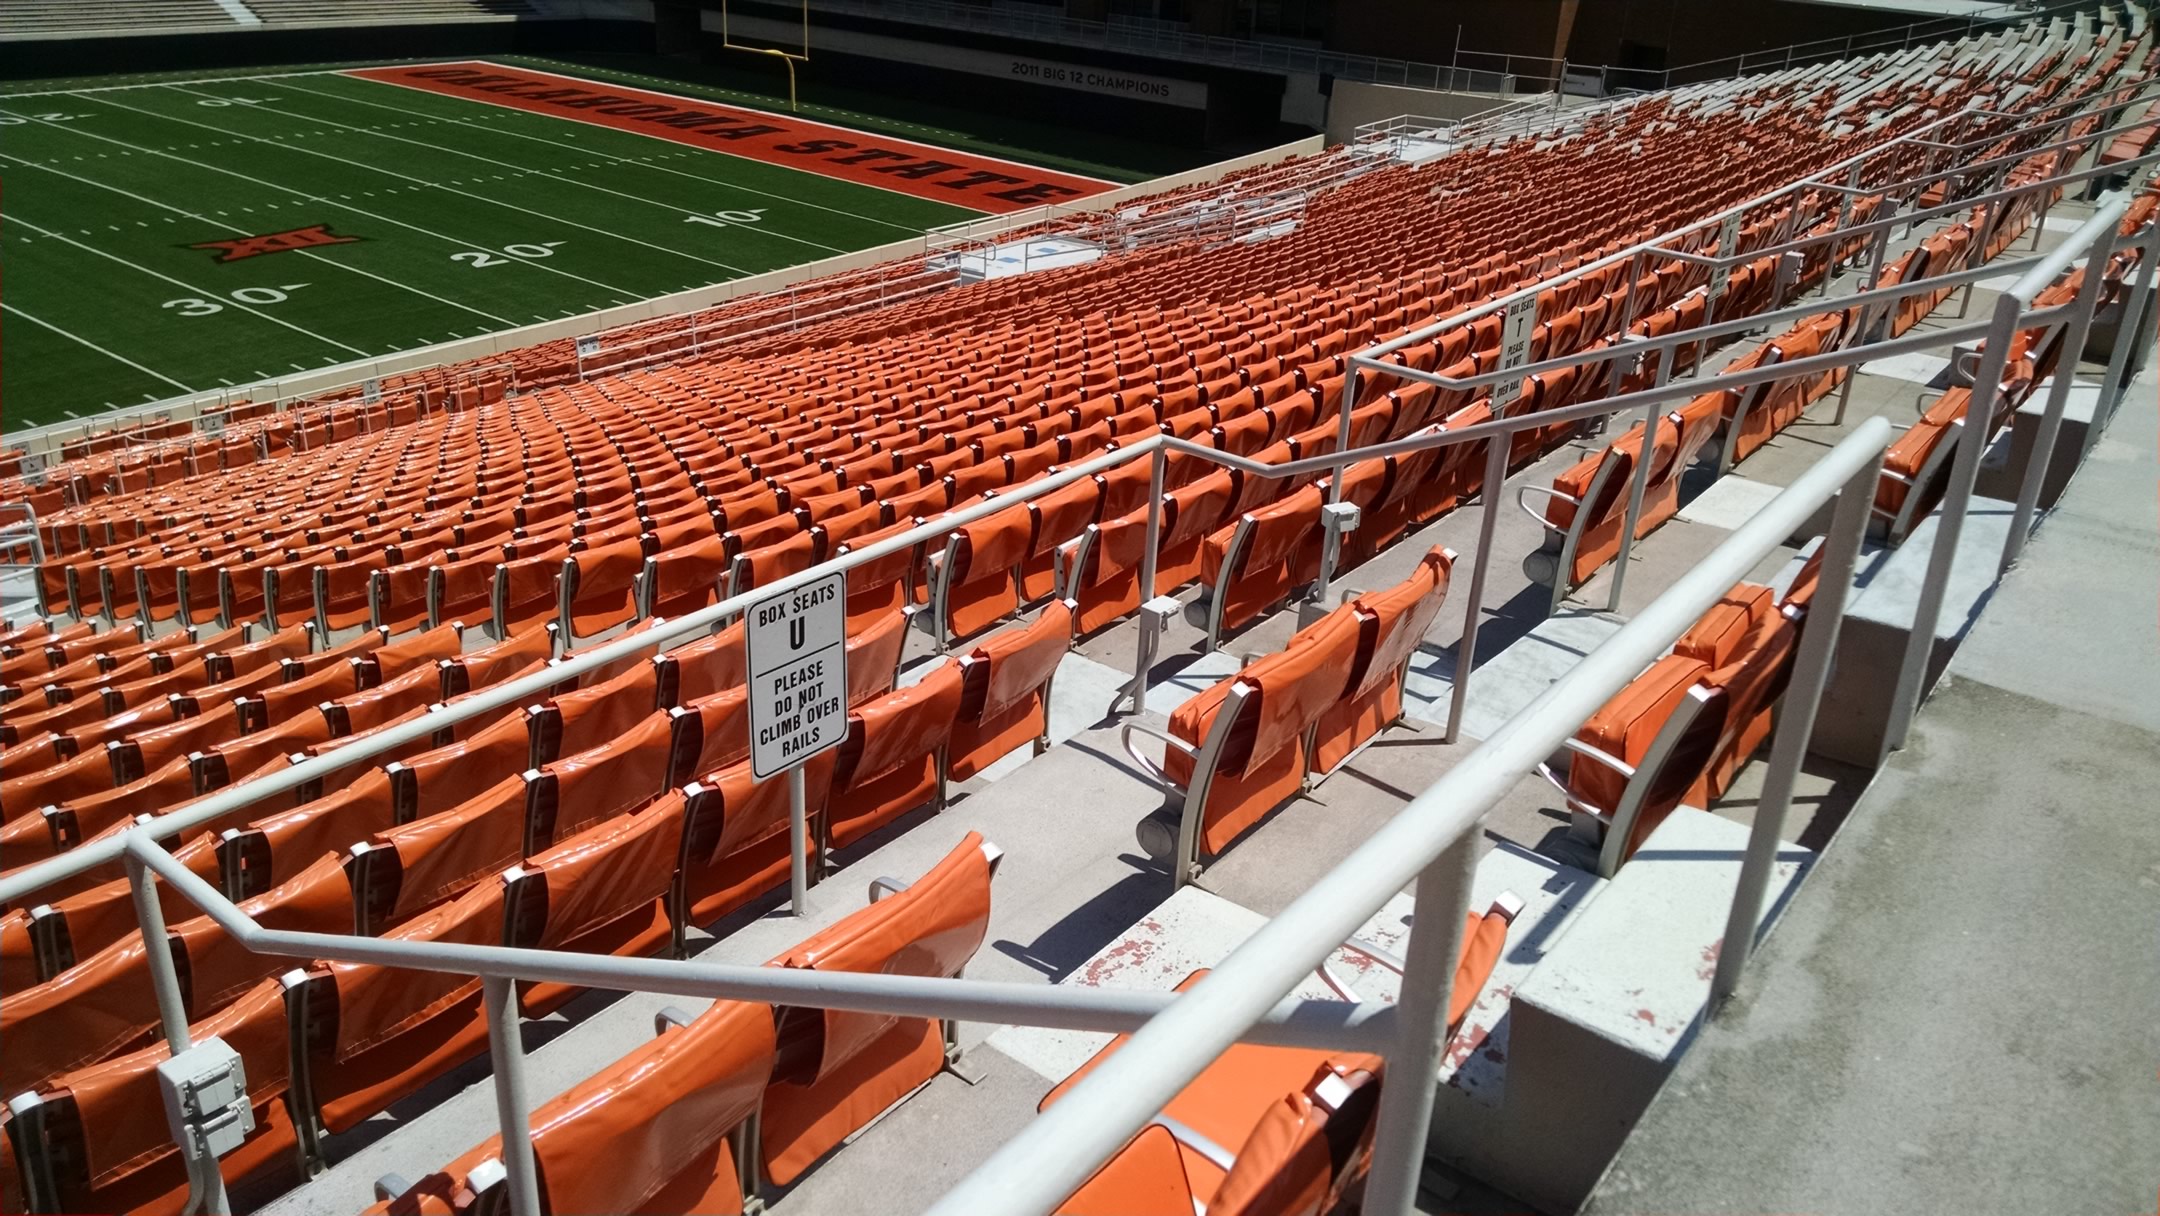 Boone Pickens Stadium (Oklahoma St.) Seating Guide